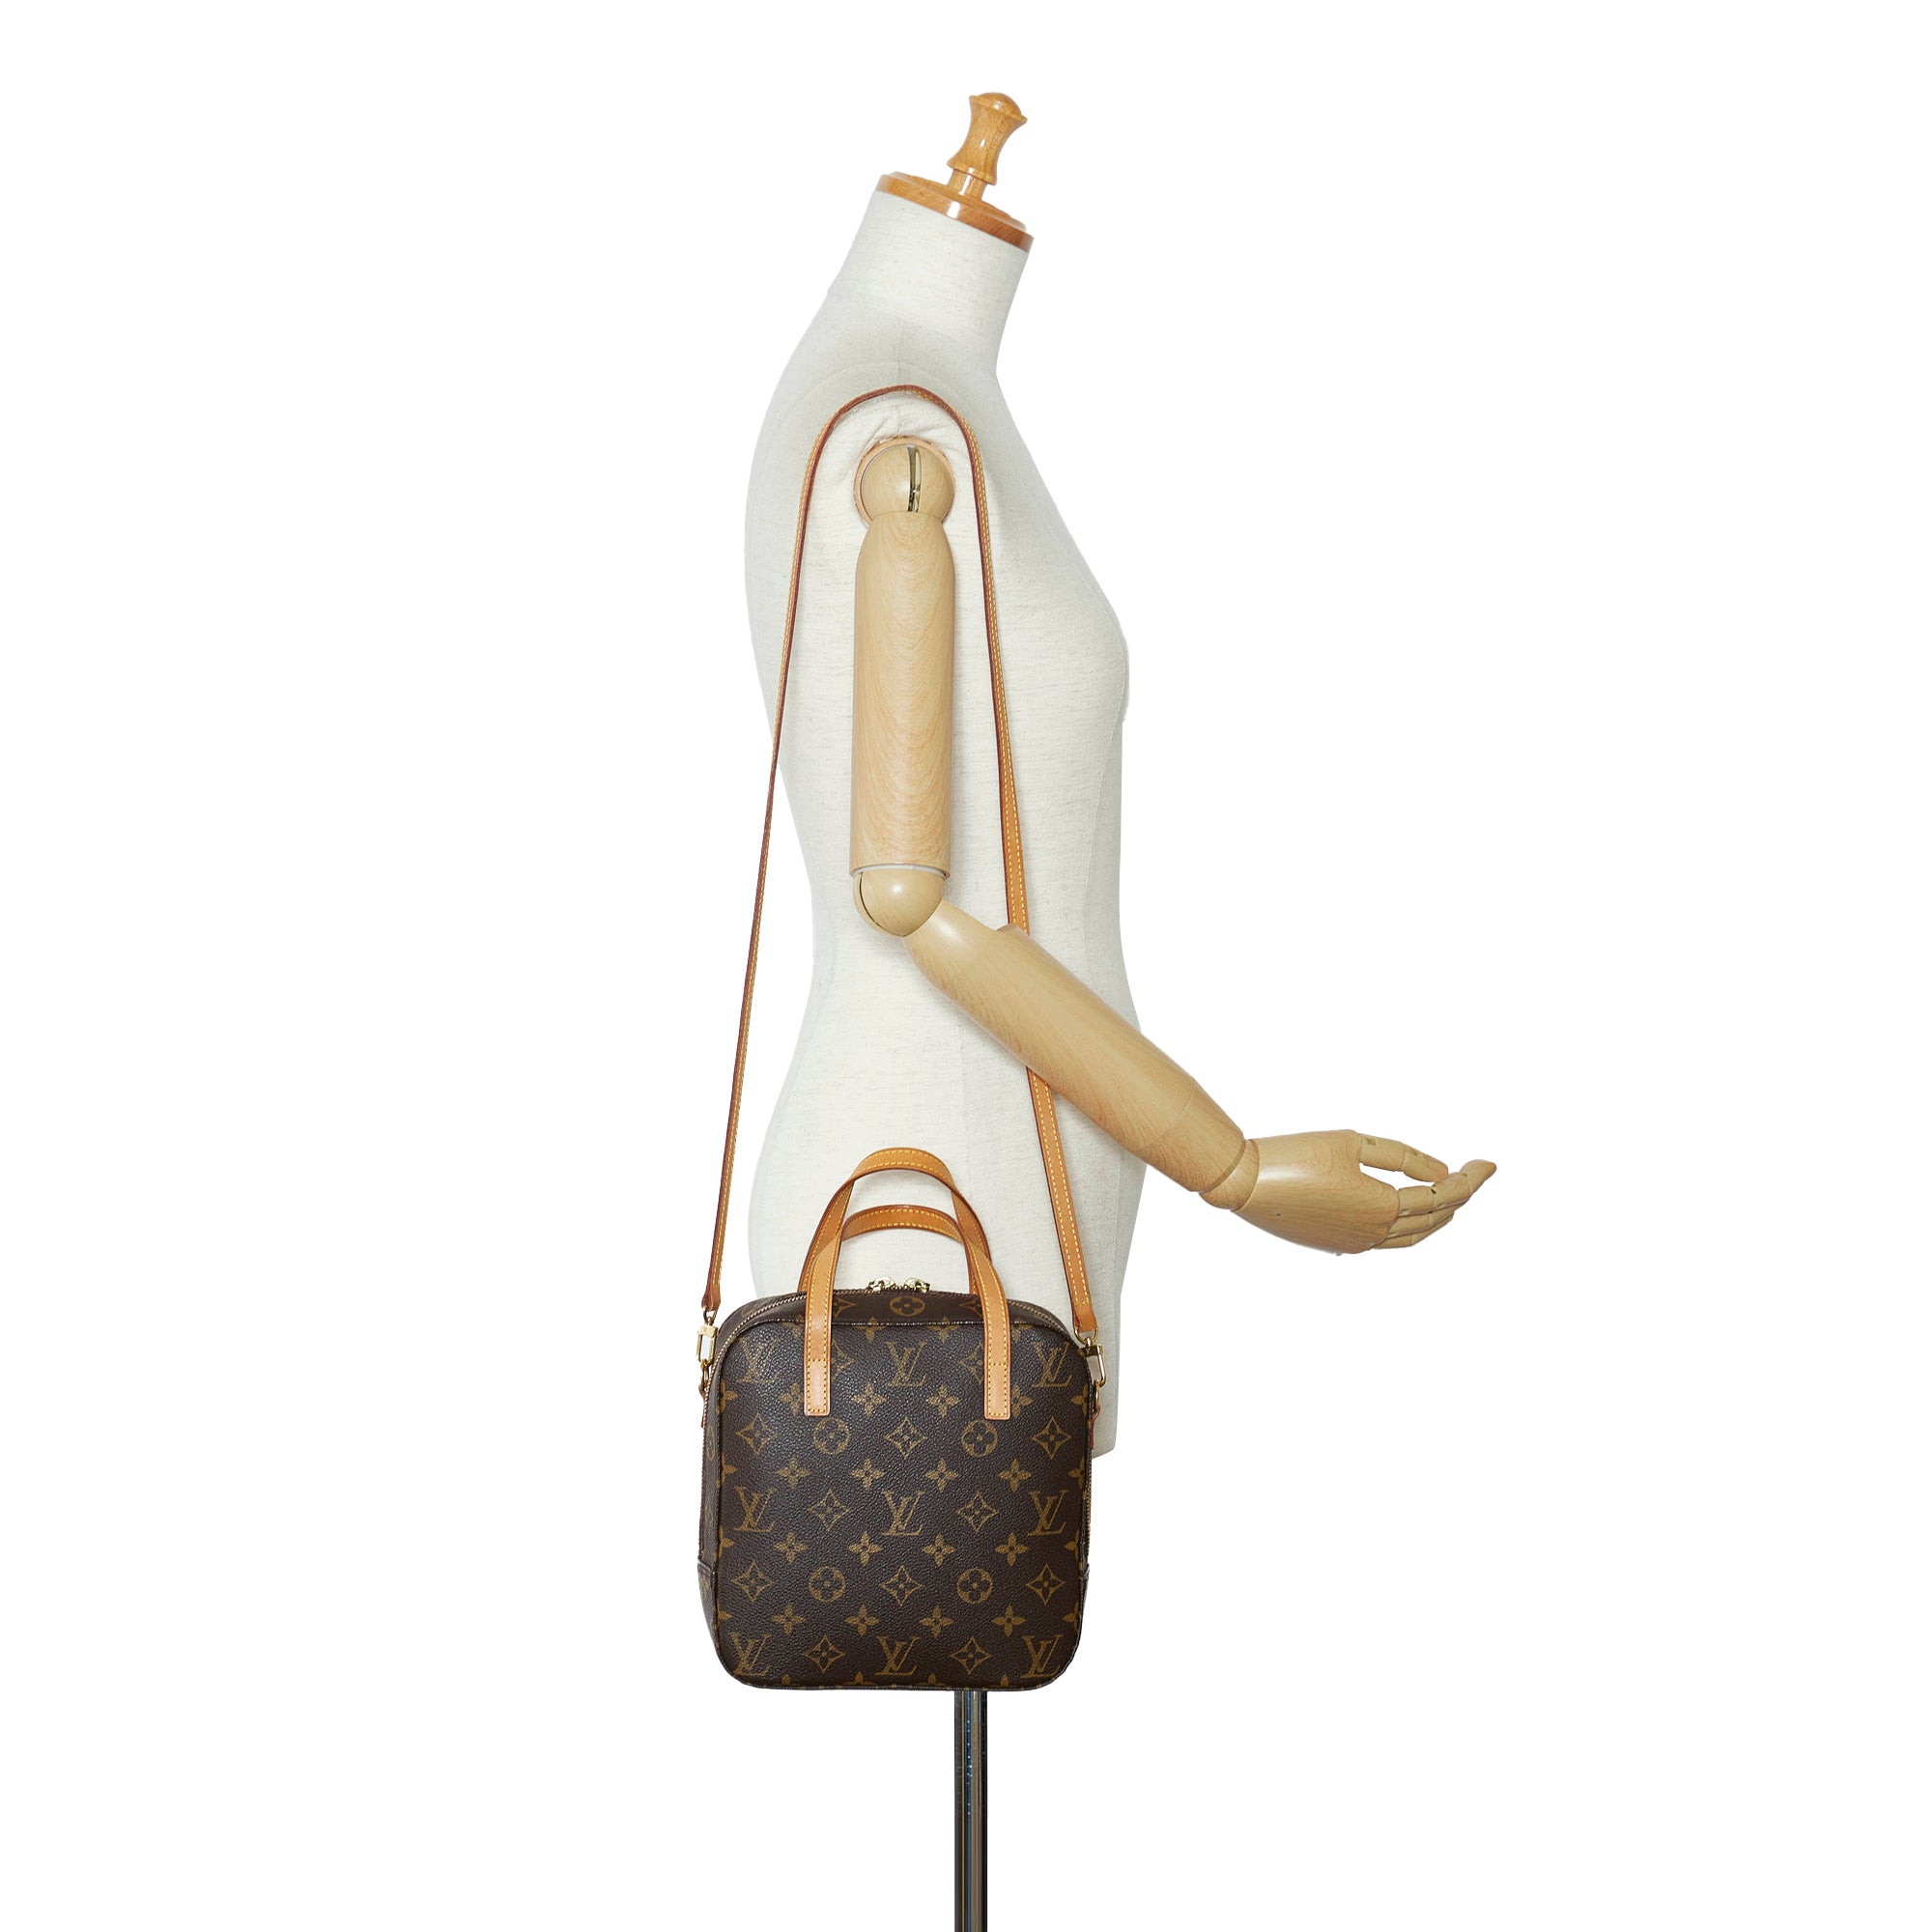 Louis Vuitton - Authenticated Spontini Handbag - Cloth Brown for Women, Good Condition